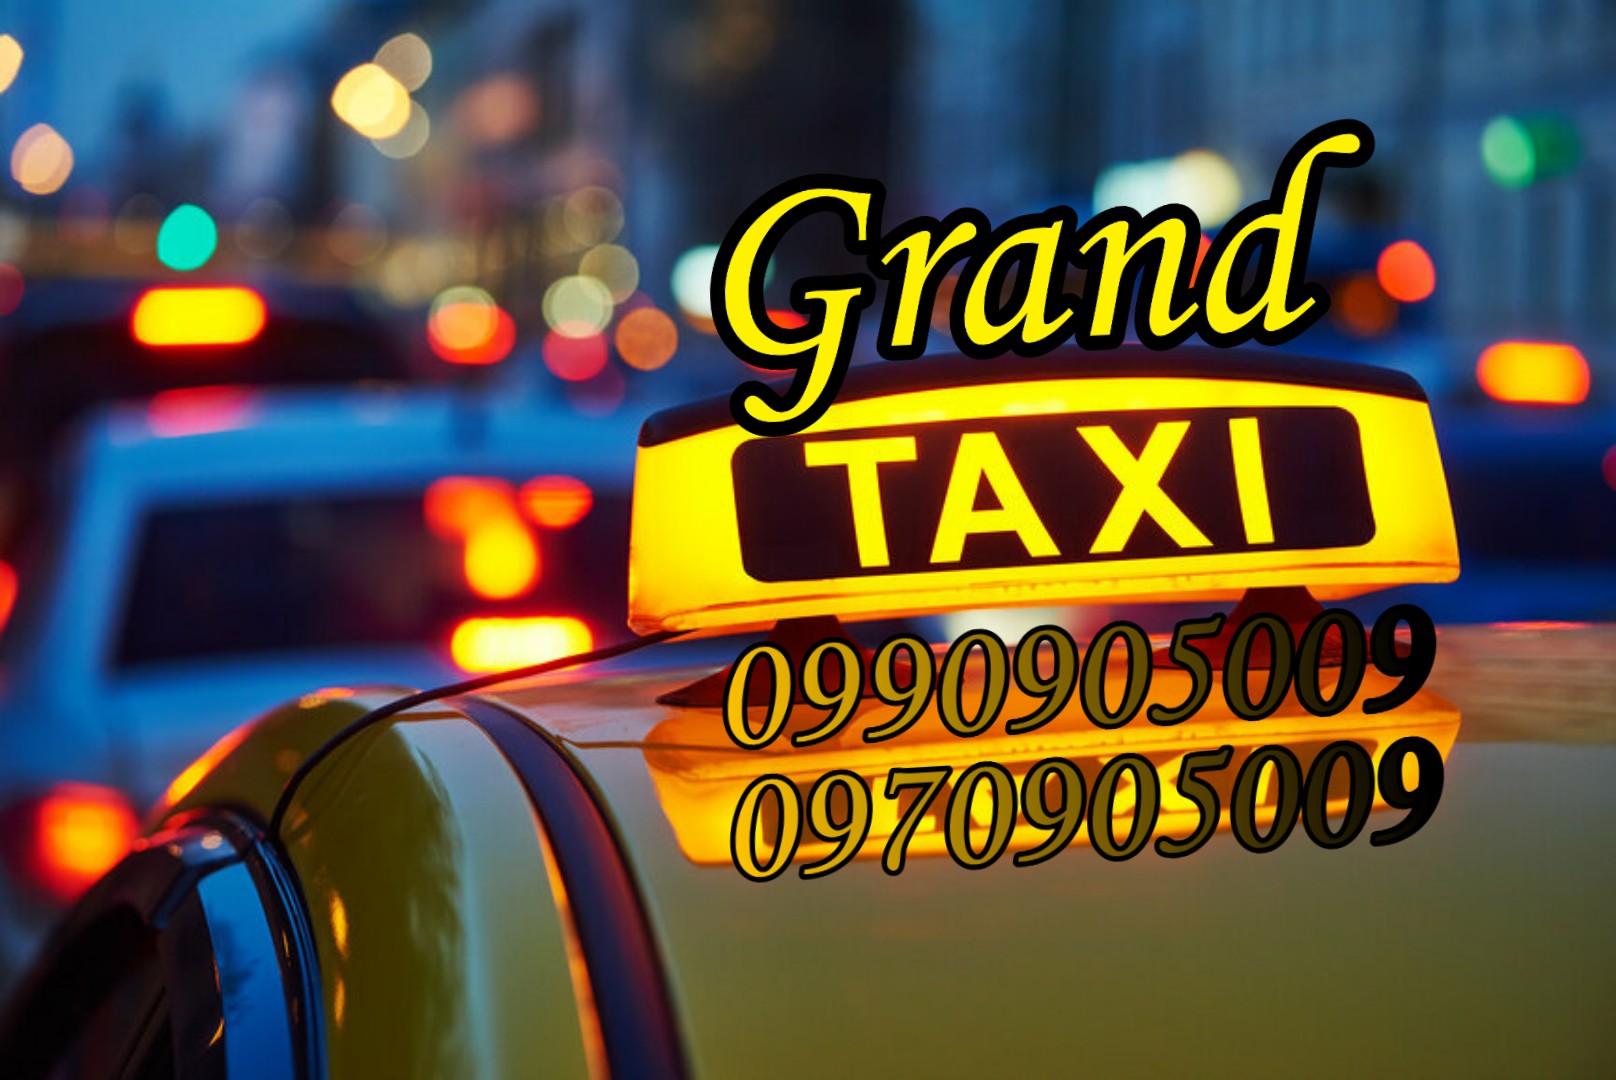 Grand taxi Лисичанск